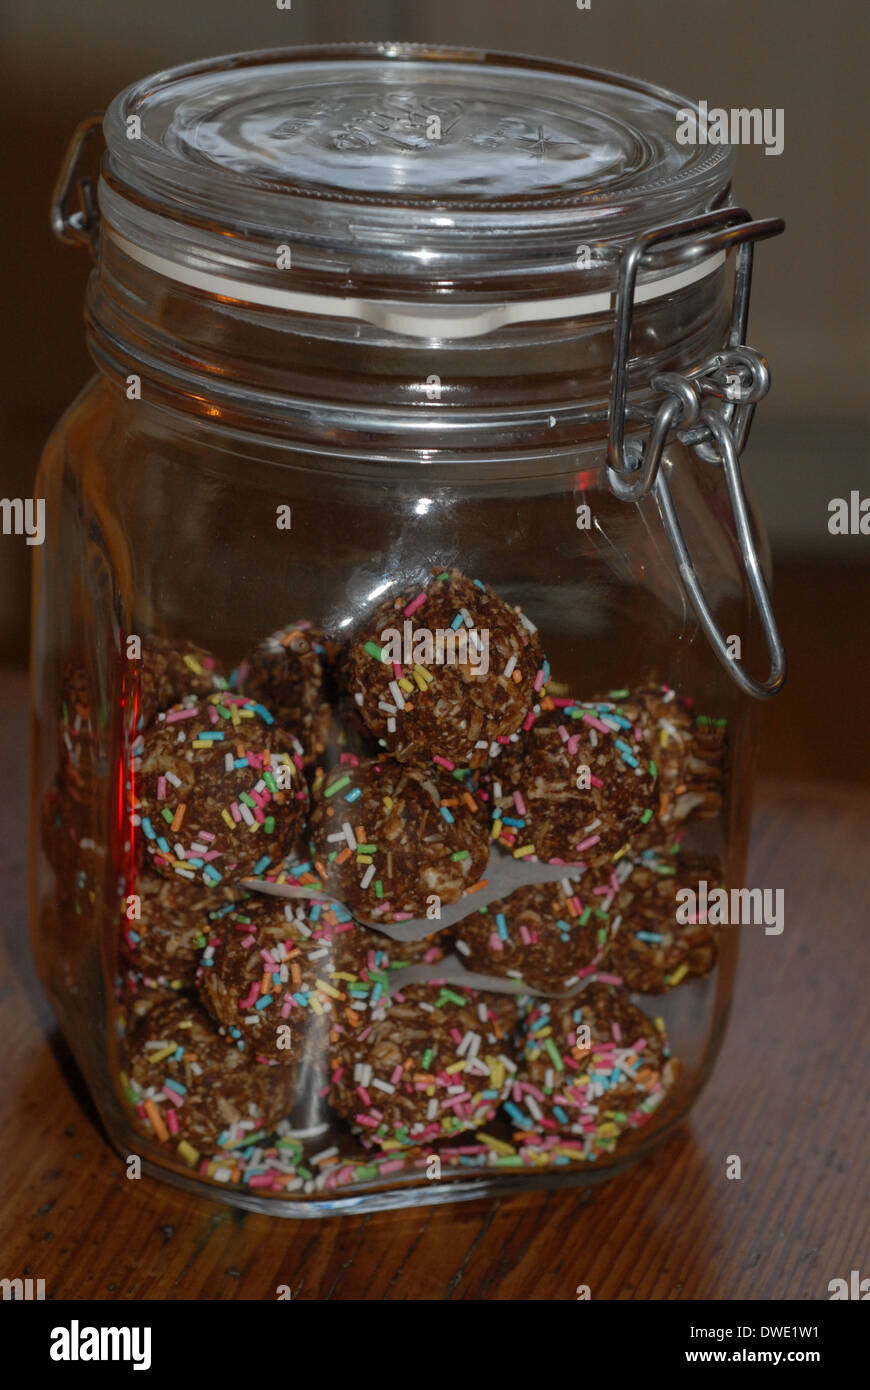 Homemade chocolate sweets in glass jar. Stock Photo